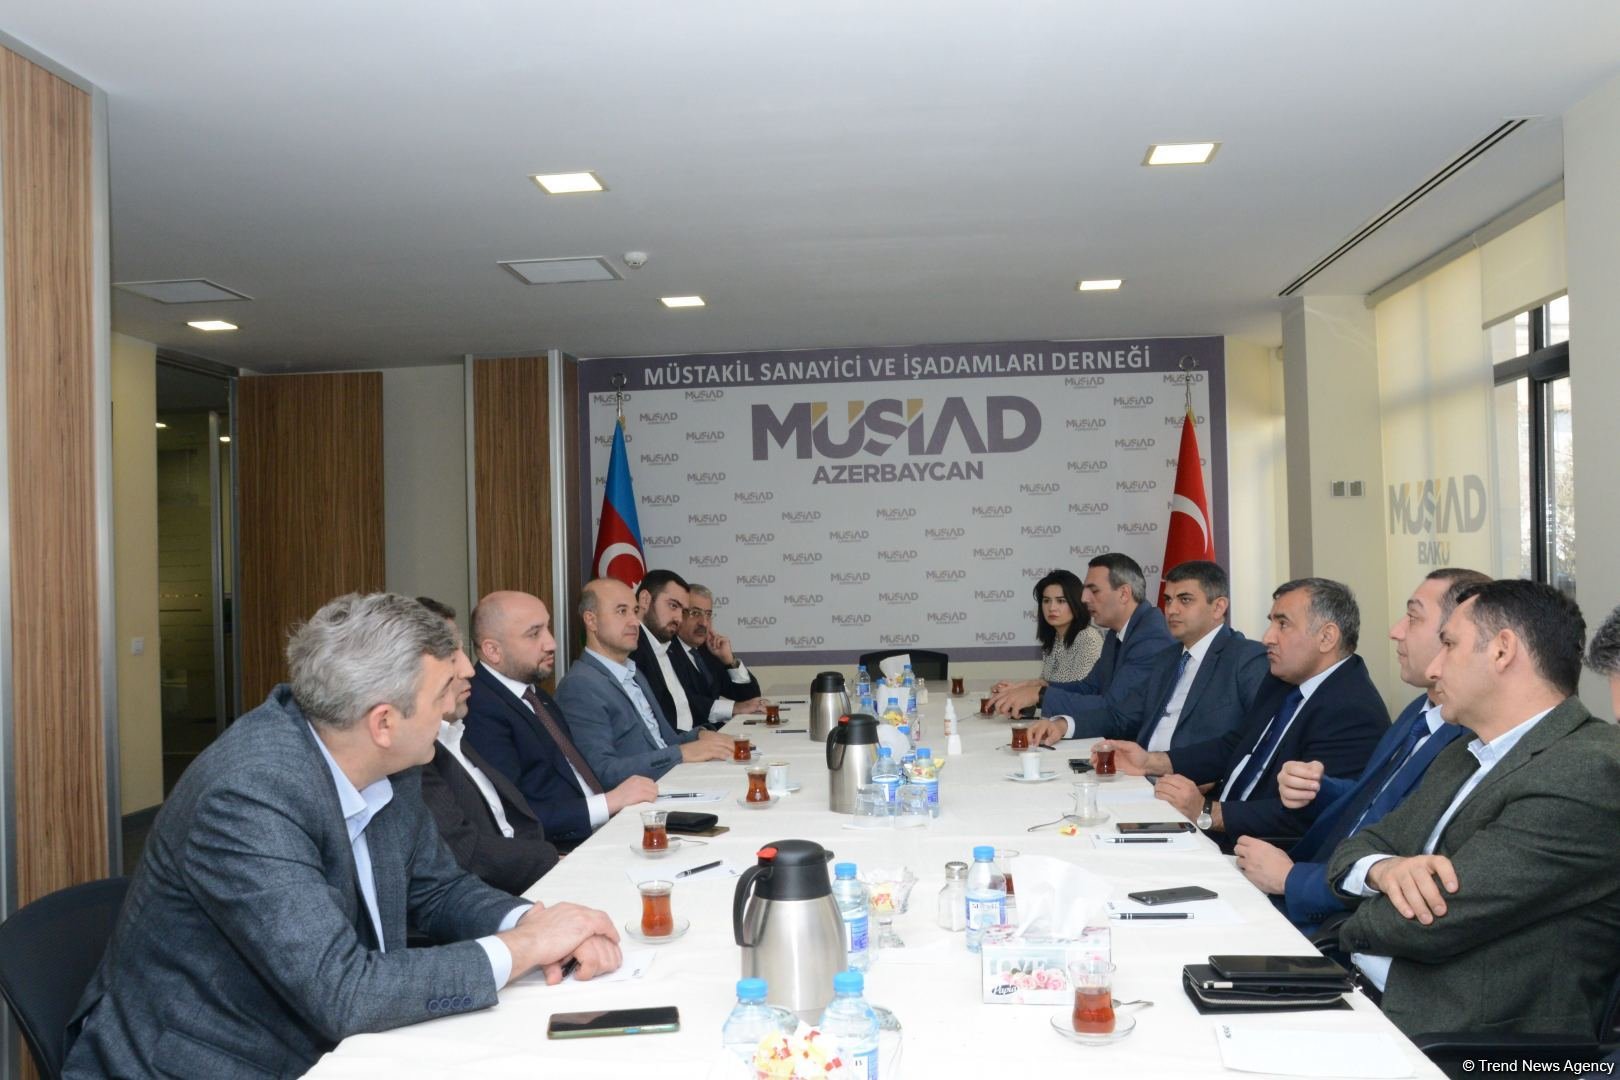 Azerbaijan's Mediation Council, MUSIAD sign cooperation protocol